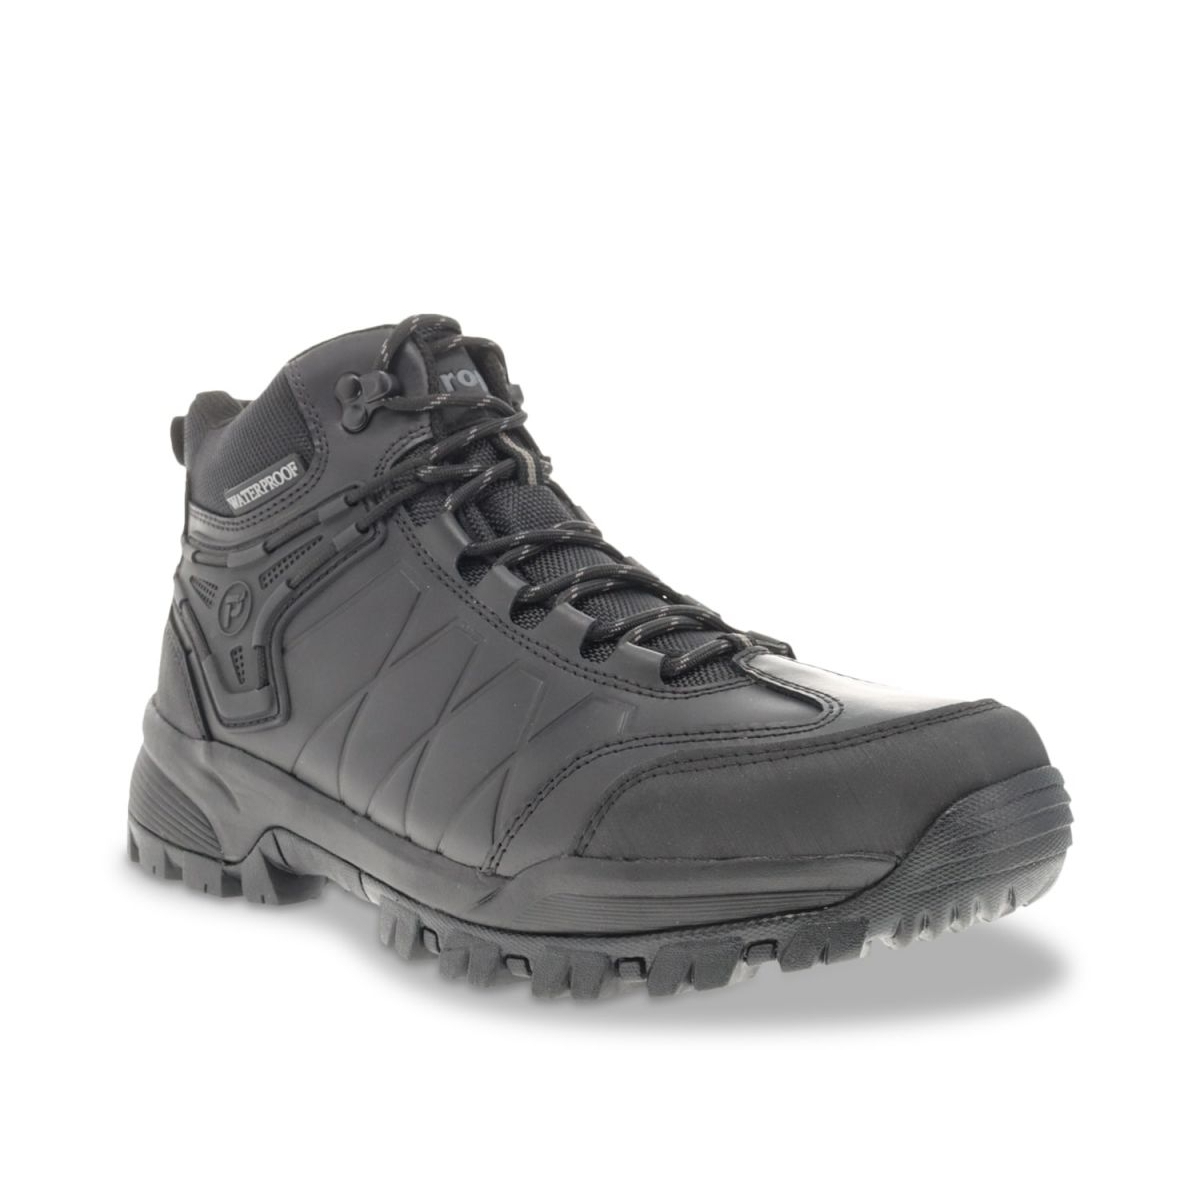 Propet Men's Ridge Walker Force Hiking Boots Black - MBA052LBLK BLACK - BLACK, 8.5